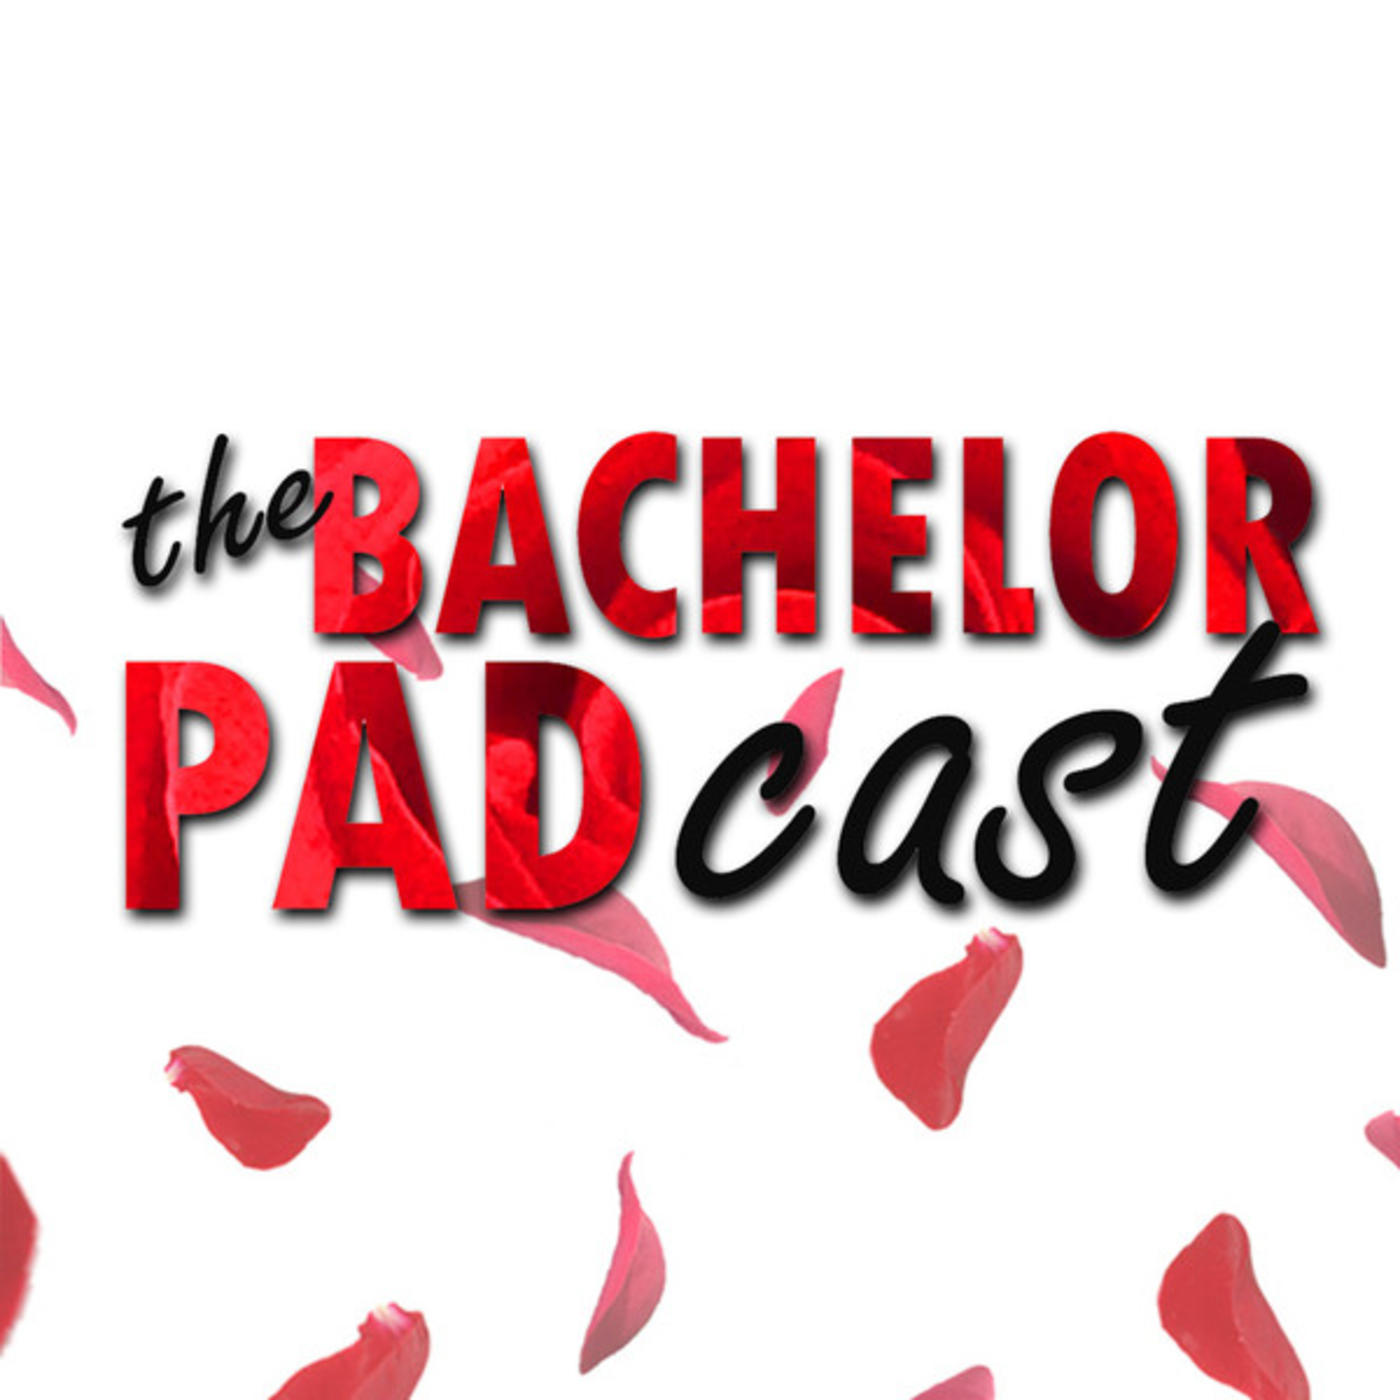 THE BACHELOR PADcast